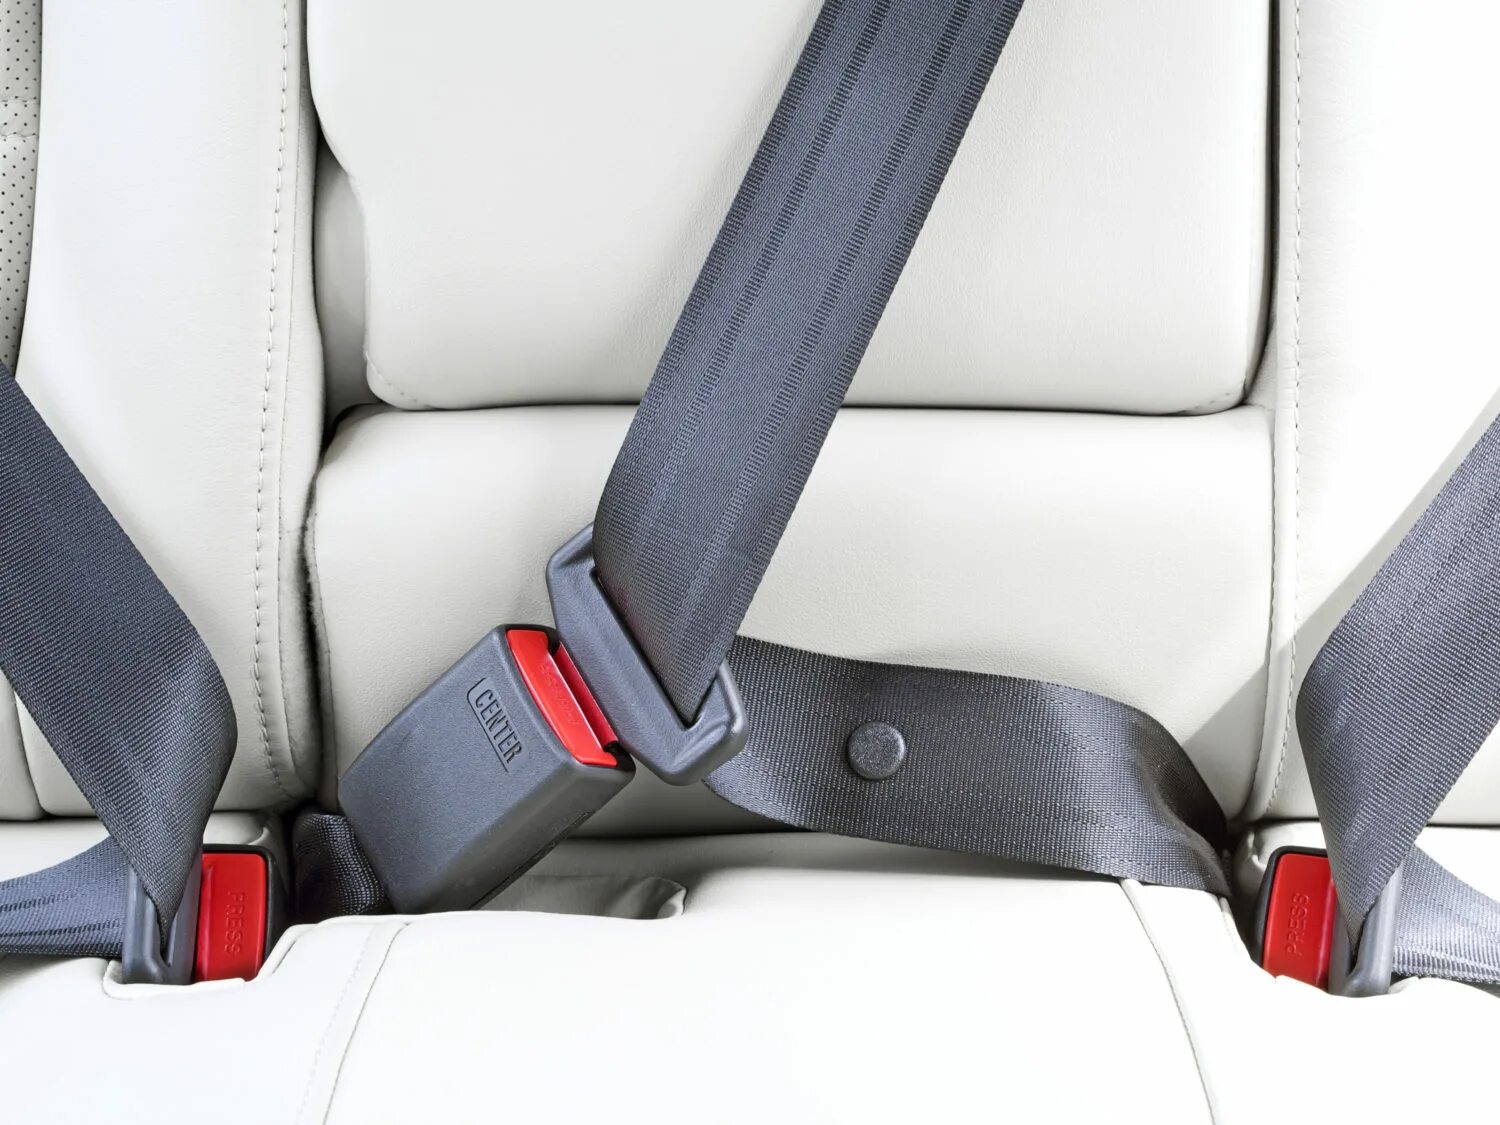 Seat Belt, Safety 95.241-210. Wear a Seat Belt. VAG 8 гр., VW, Seat Belt. Ремни безопасности пассажиров задних рядов т4.